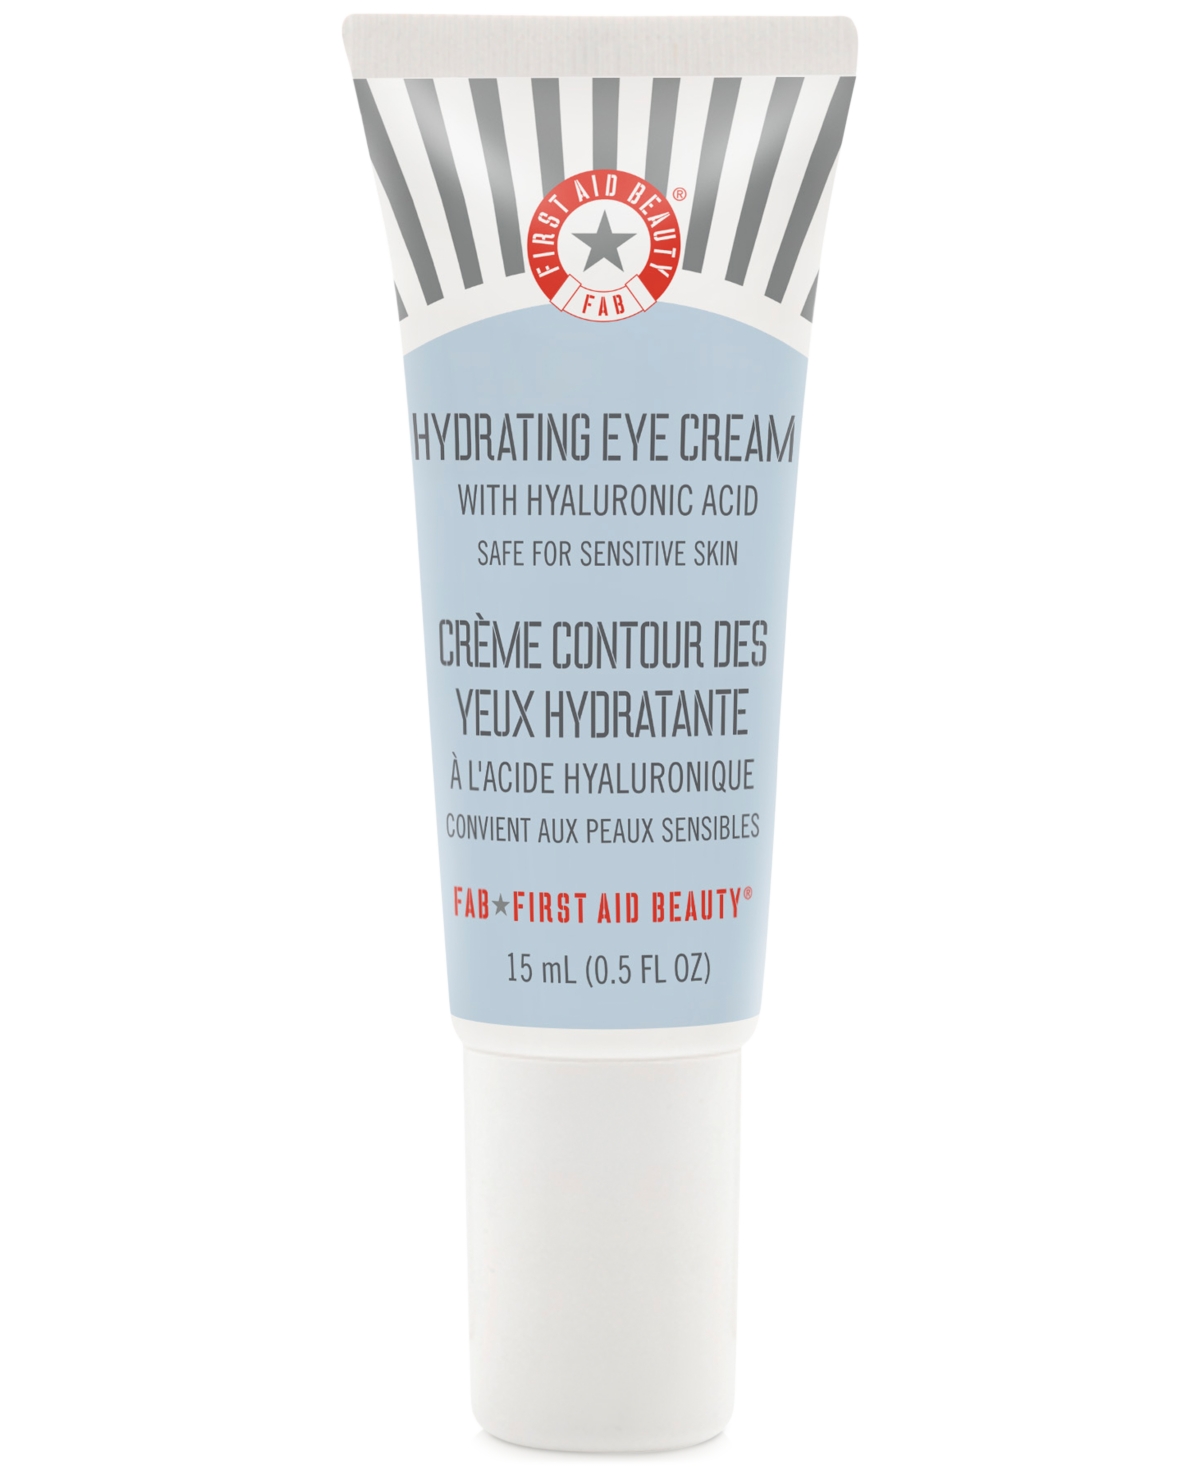 Hydrating Eye Cream With Hyaluronic Acid